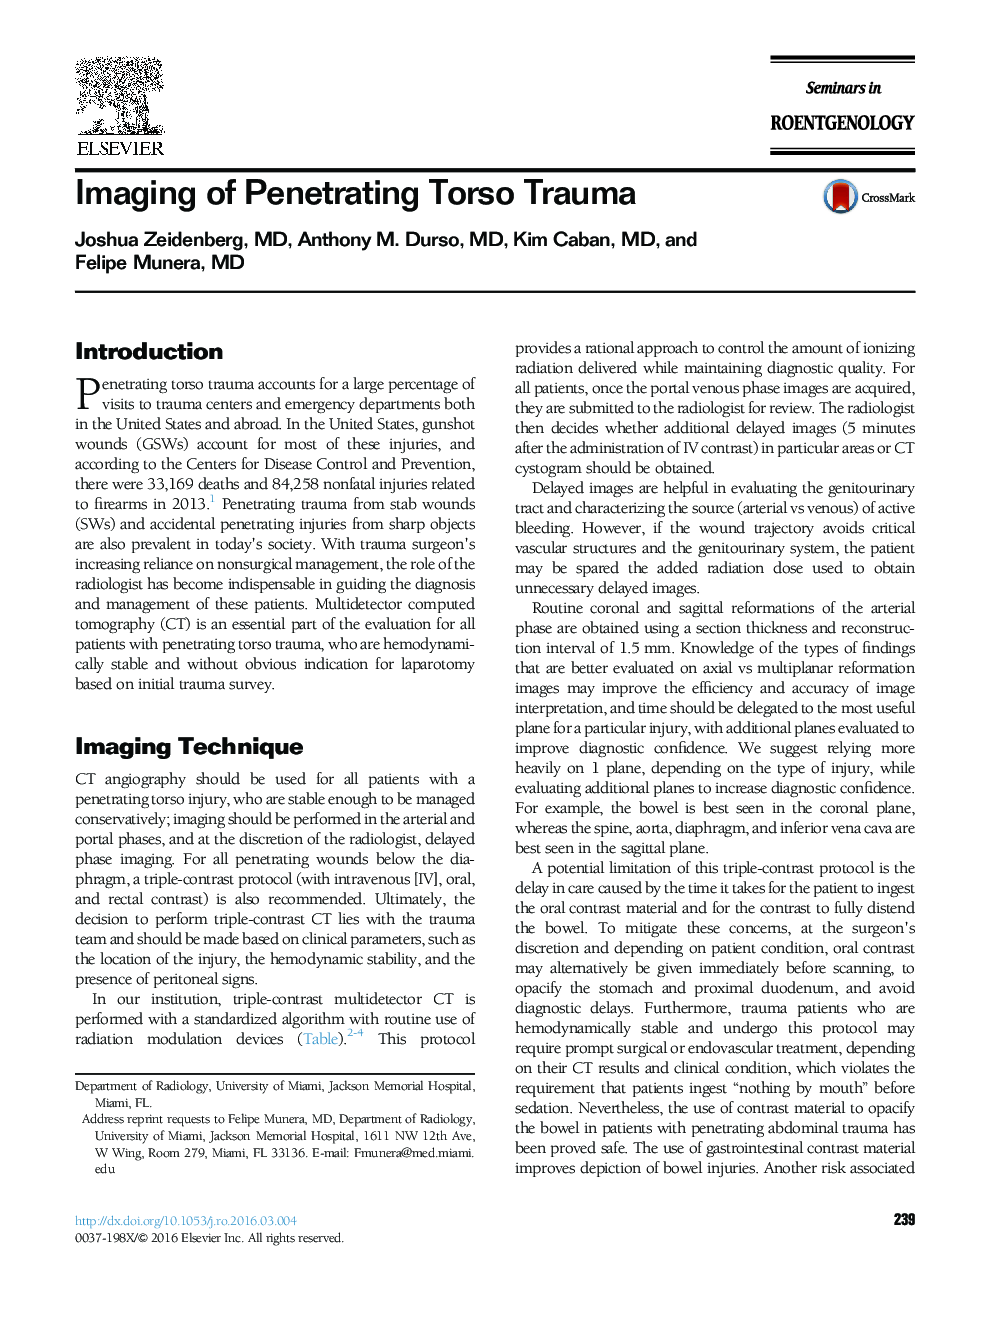 Imaging of Penetrating Torso Trauma